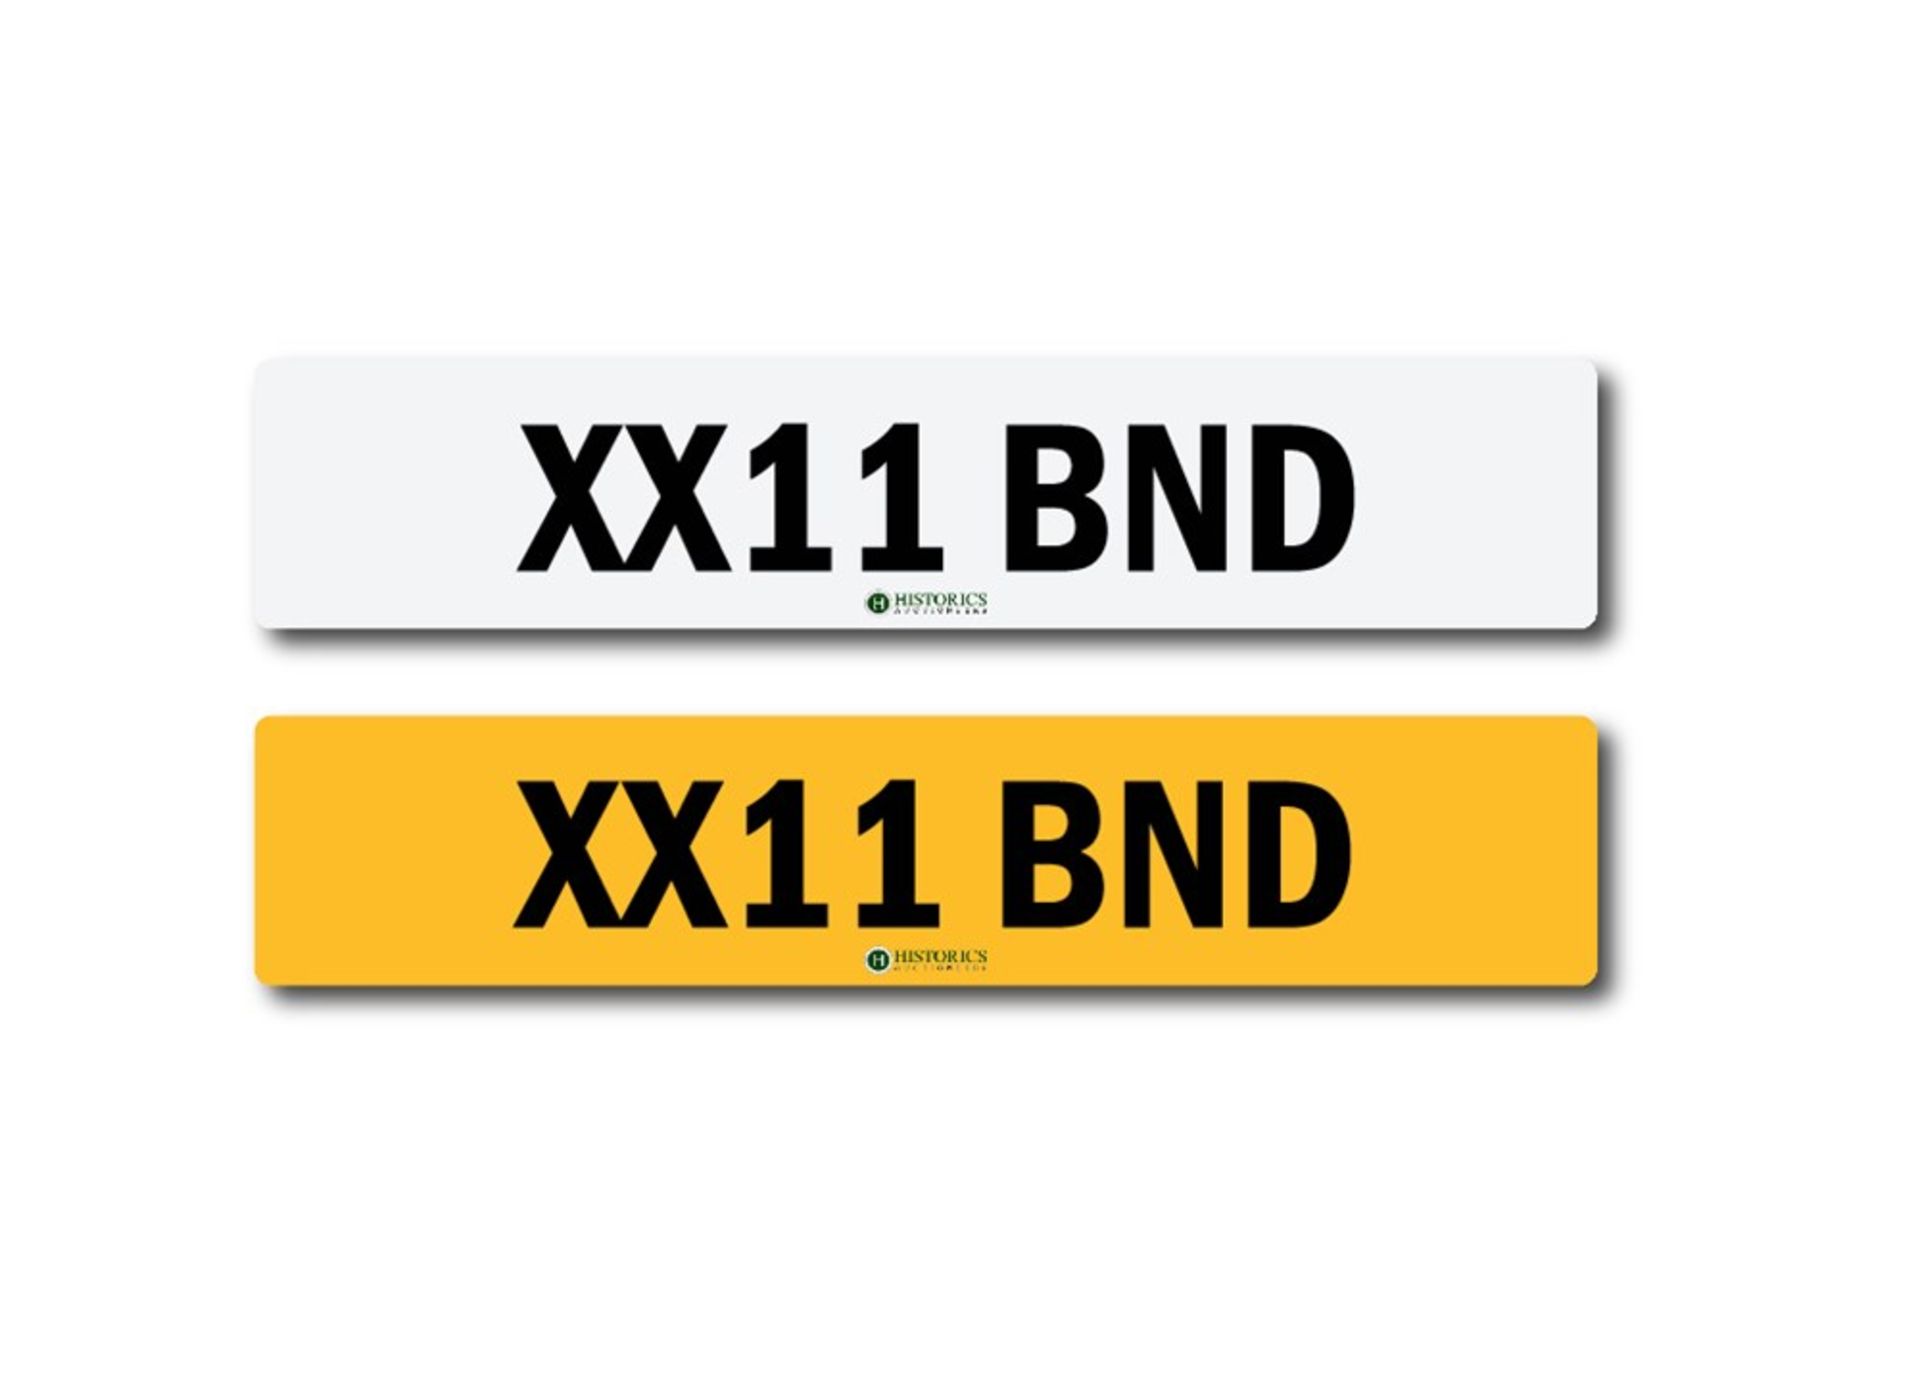 Registration Number XX11 BND